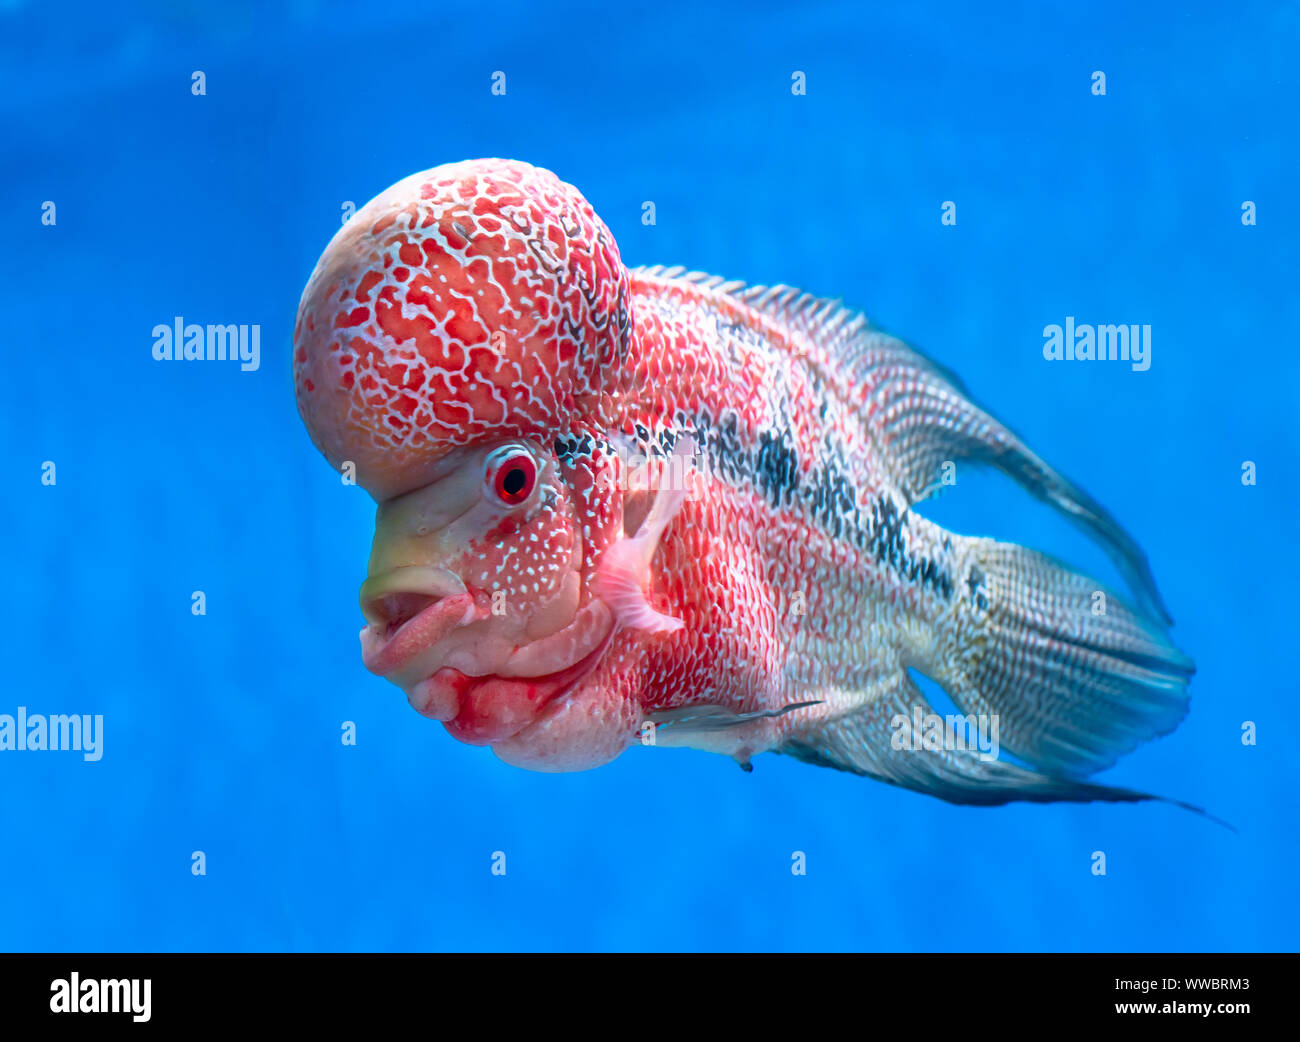 15 Feng Shui Fish To Keep In An Aquarium - Feng Shui Tips & Images